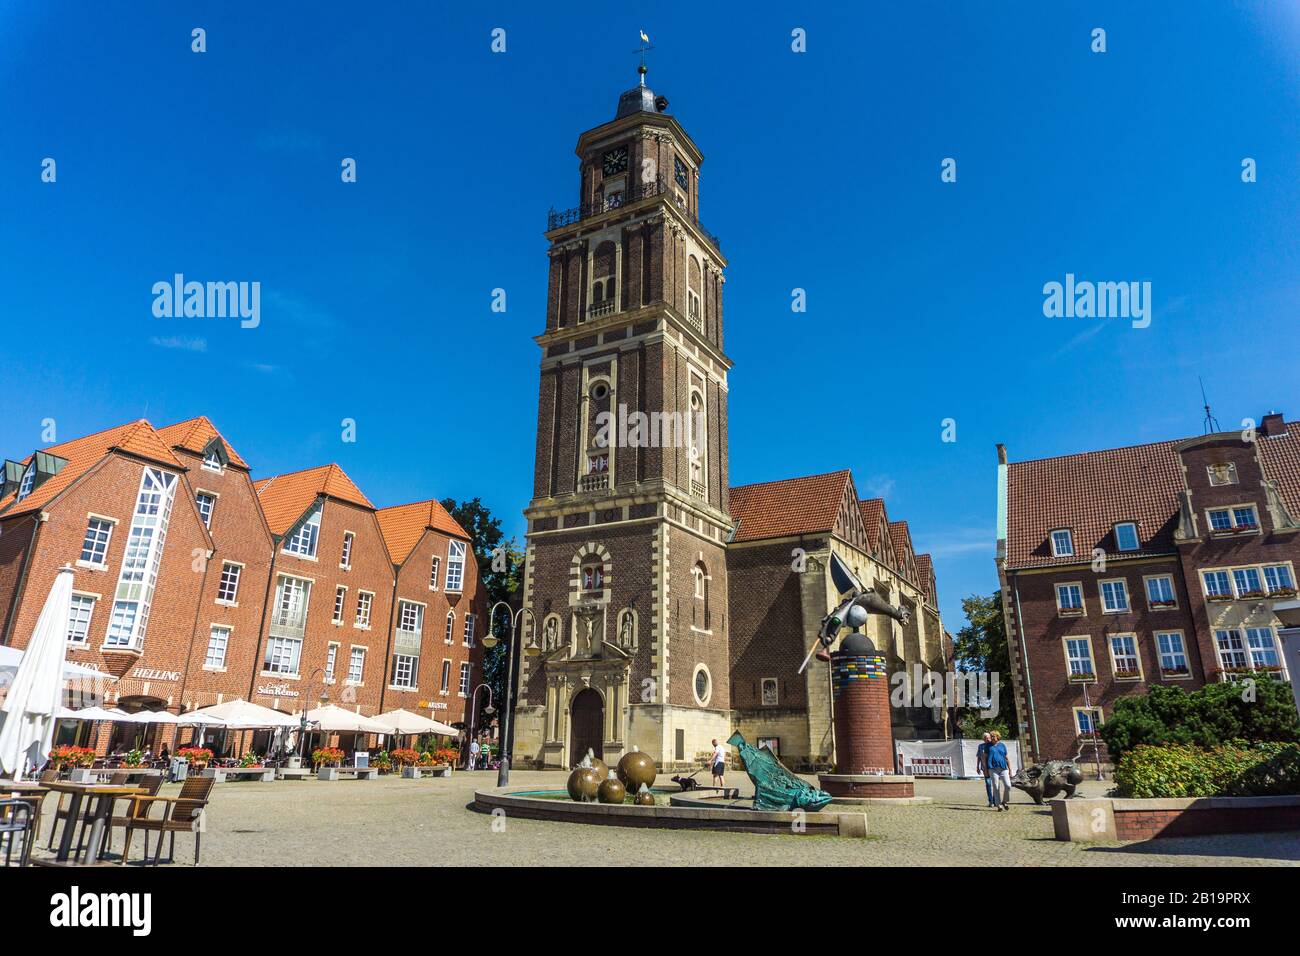 Pfarrkirche St. Lamberti auf dem Marktplatz von Coesfeld, Nordrhein-Westfalen, Deutschland   |   Catholic St. Lambert church on market square Coesfeld Stock Photo